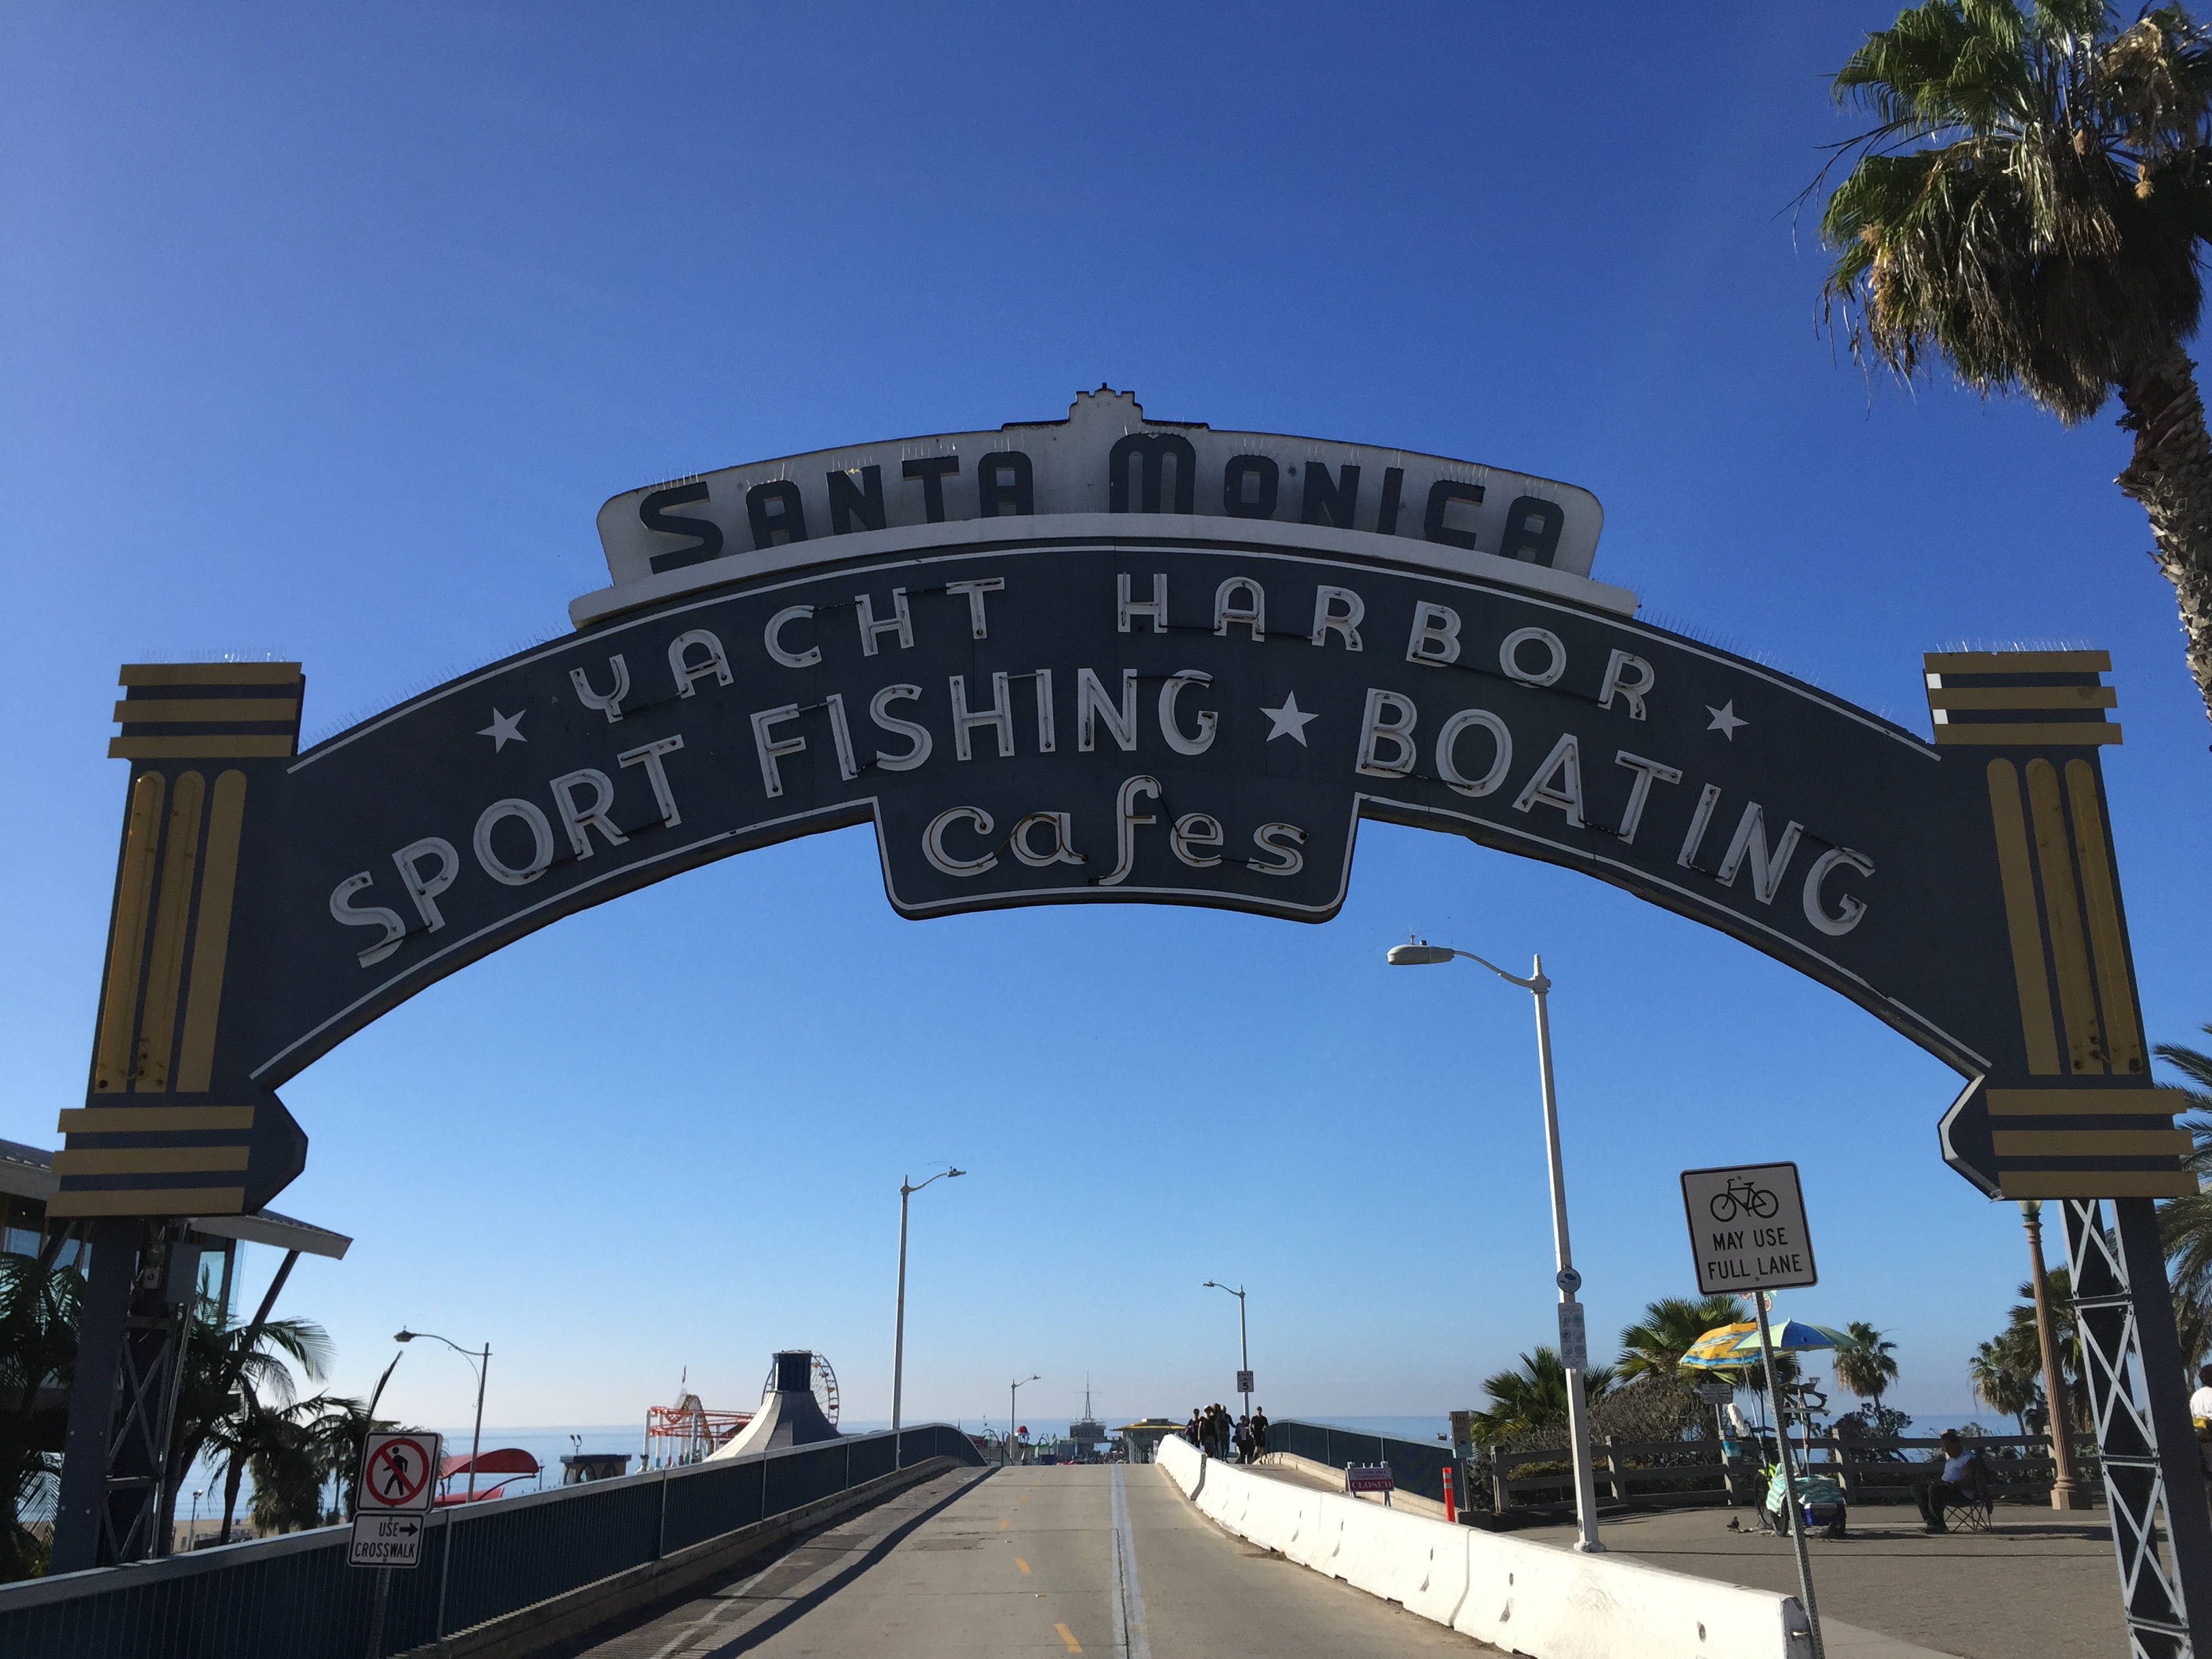 Santa Monica Yacht Club